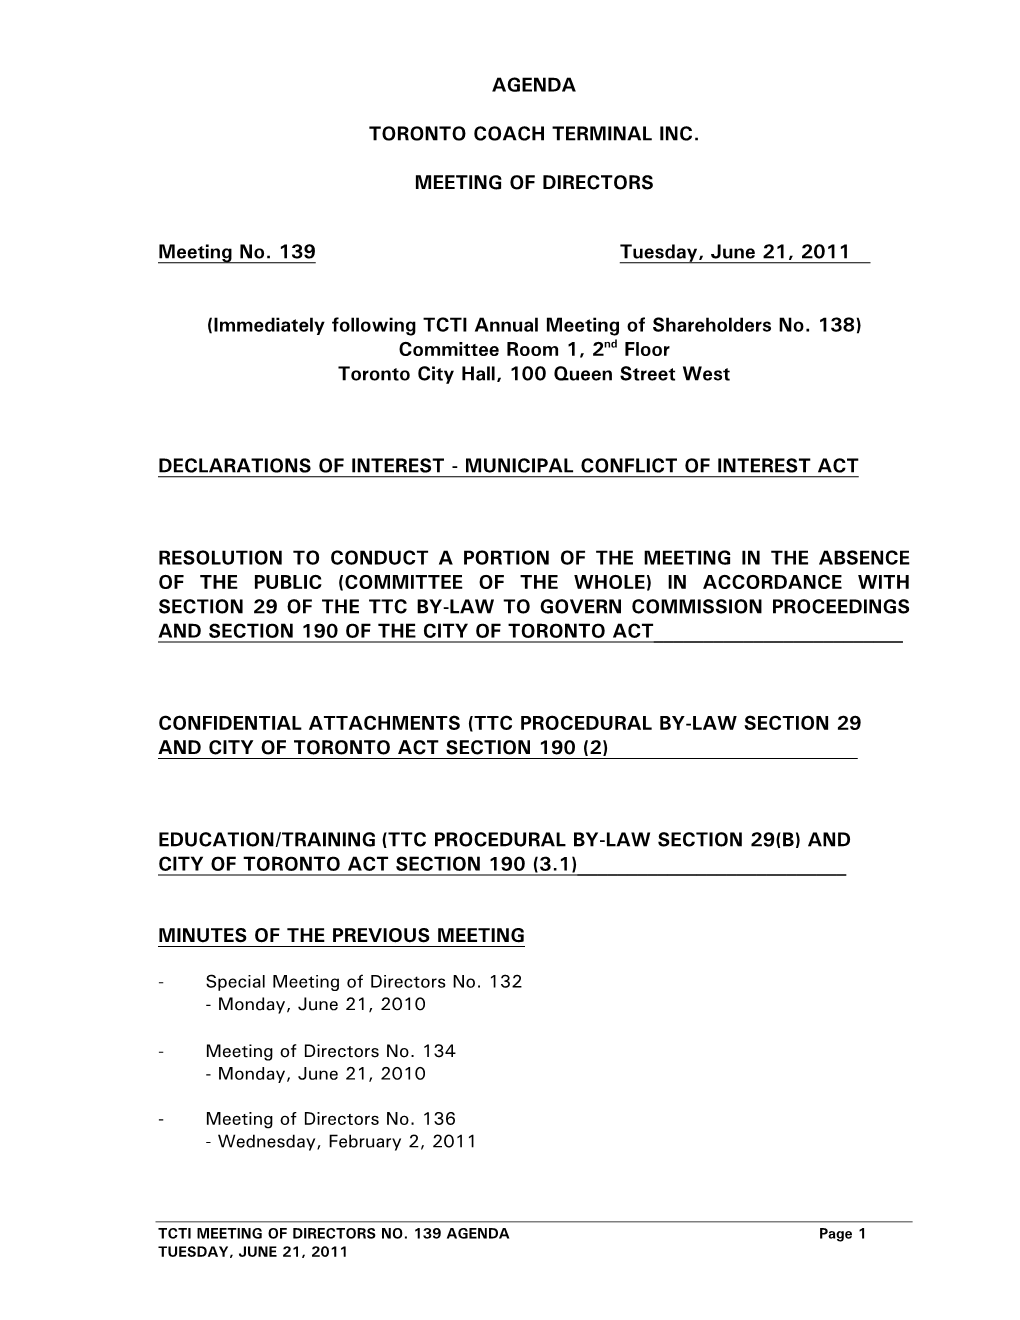 AGENDA TORONTO COACH TERMINAL INC. MEETING of DIRECTORS Meeting No. 139 Tuesday, June 21, 2011